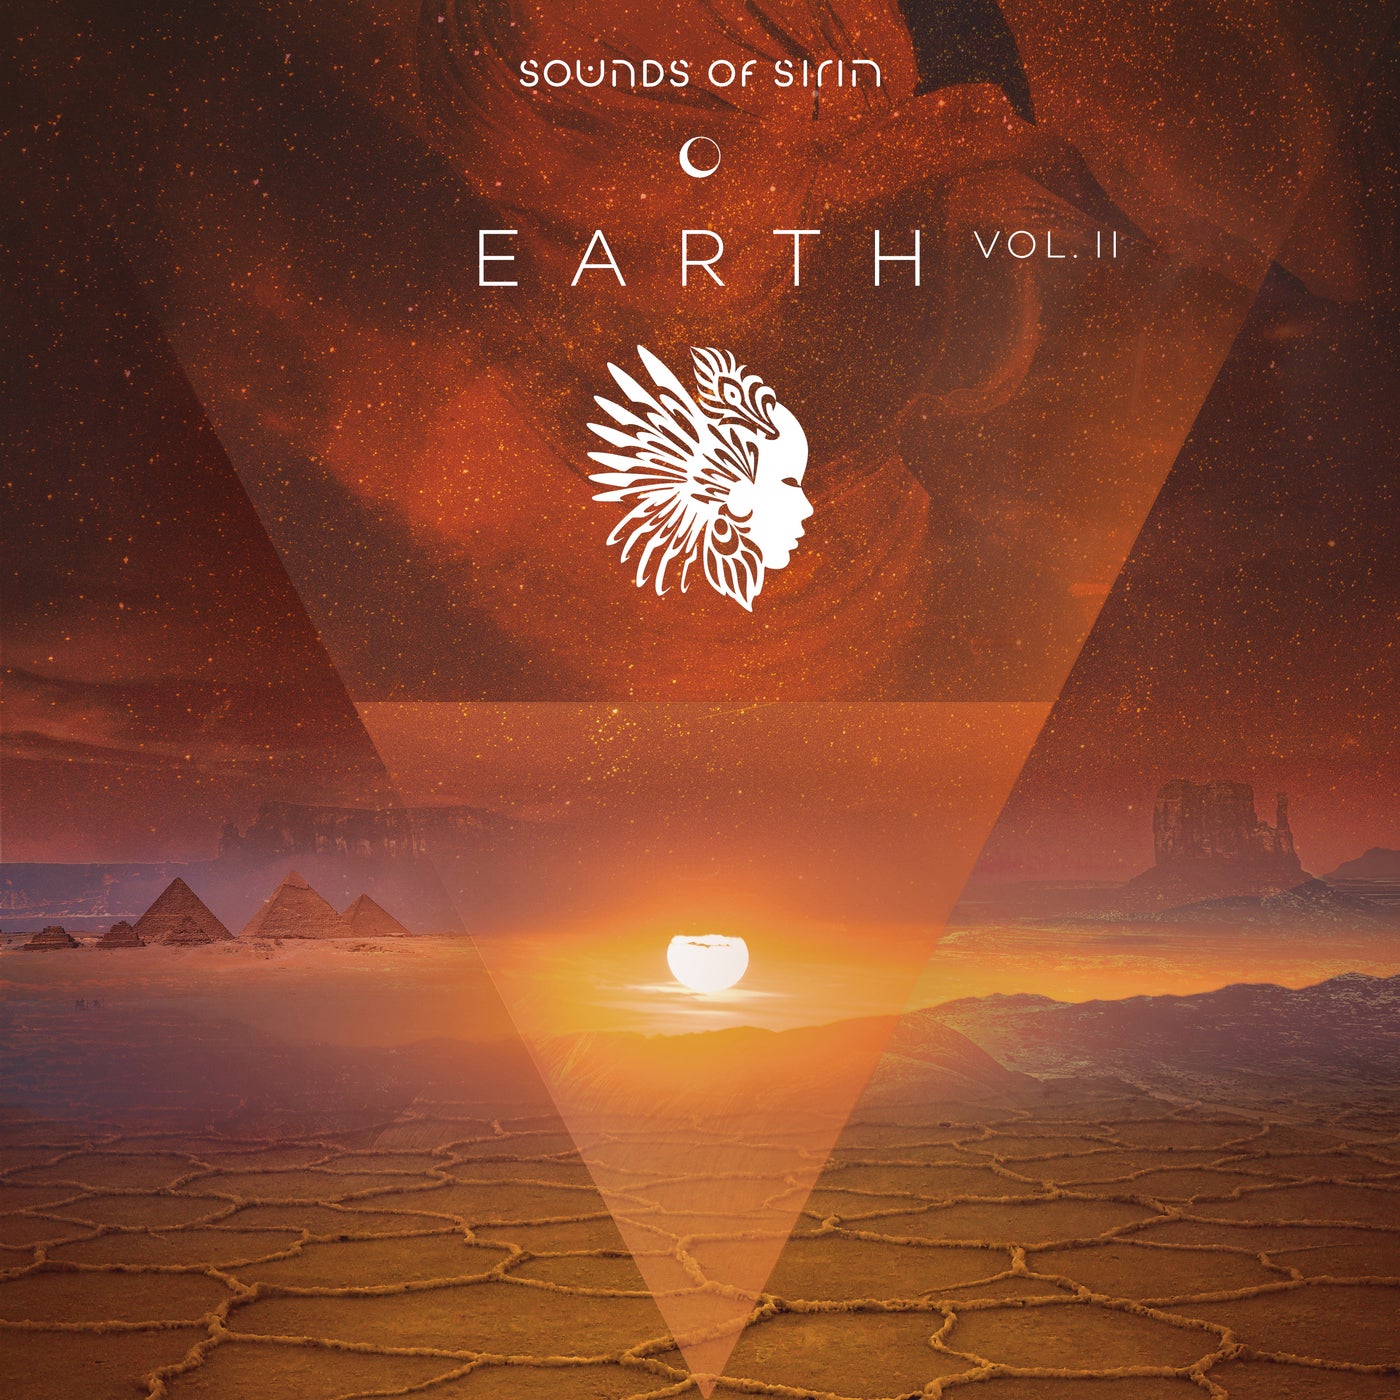 VA - Sounds of Sirin Earth Vol. II [SIRIN040]